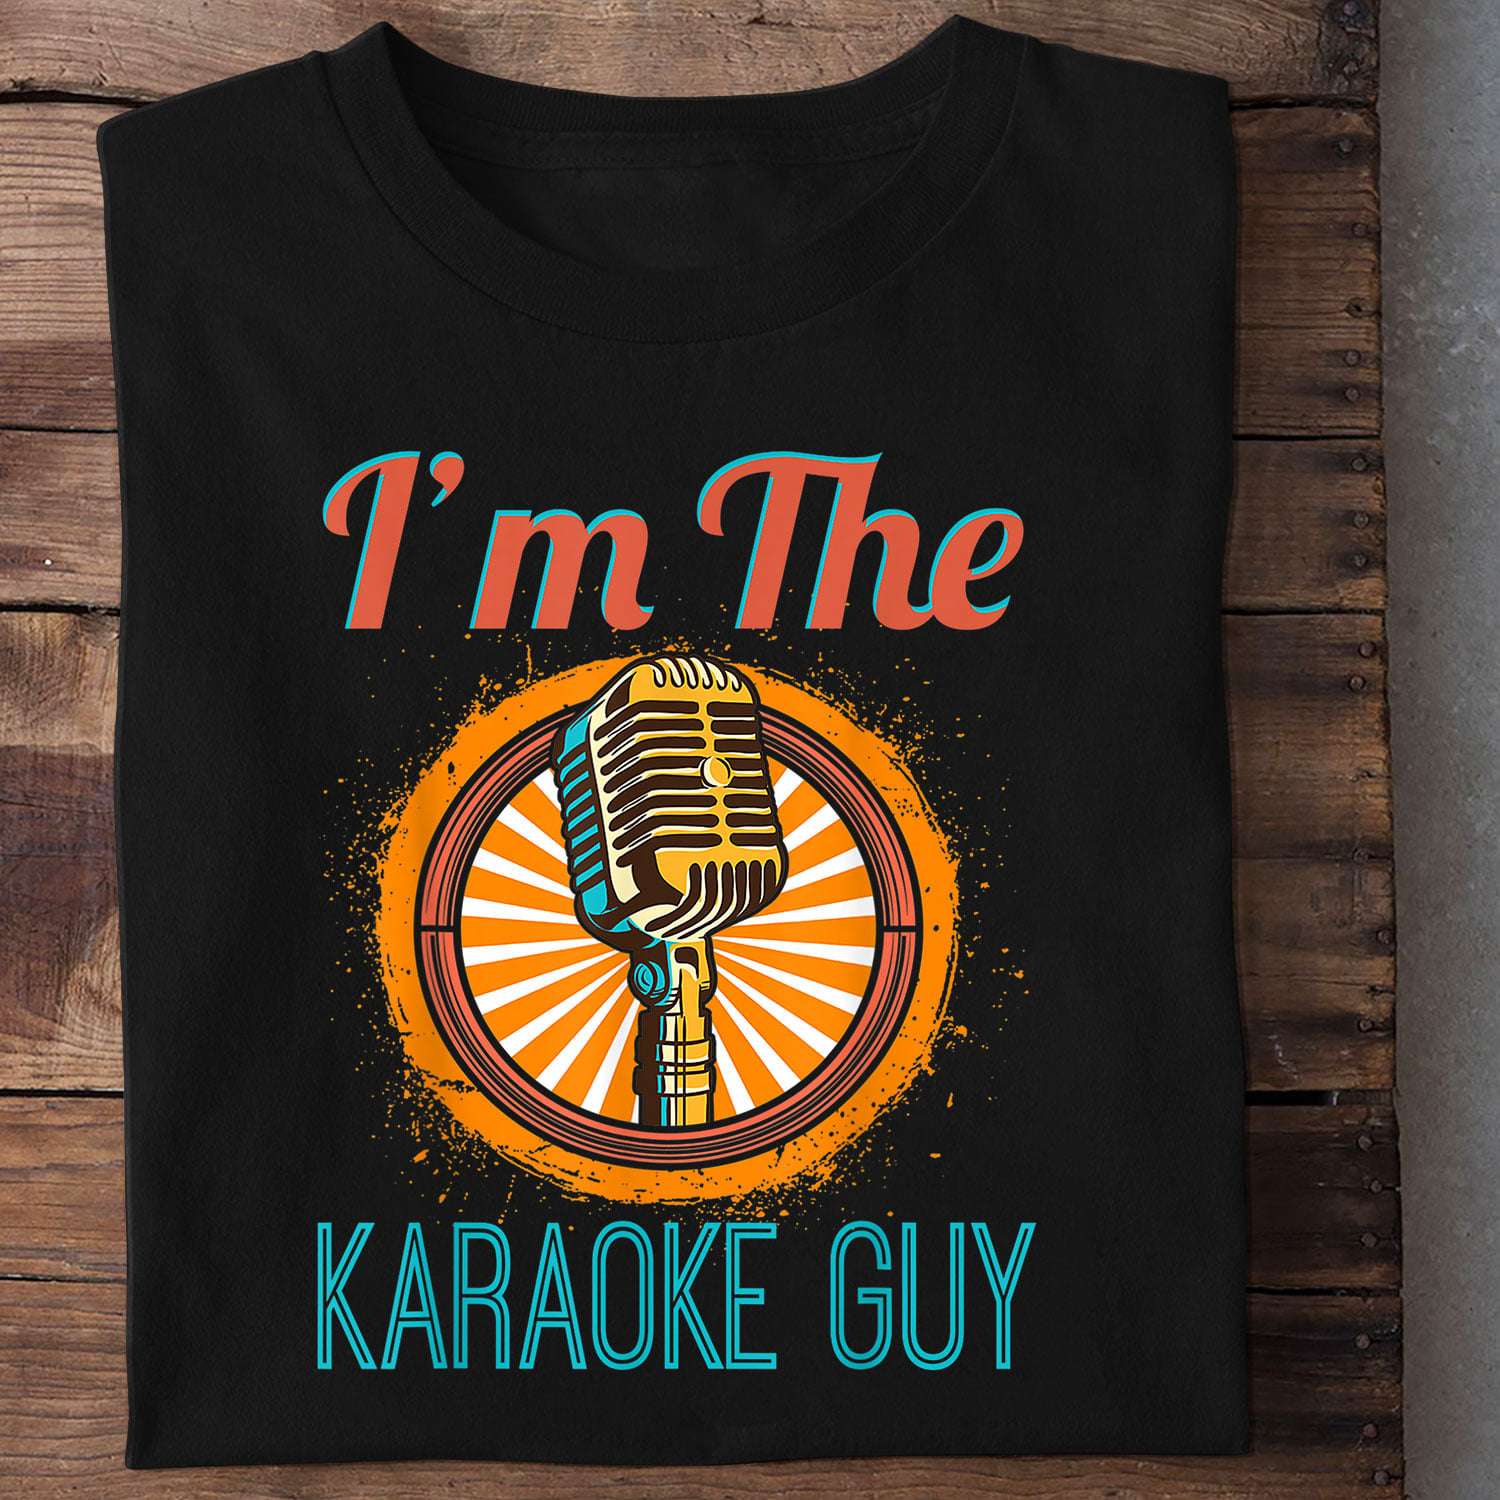 I'm the karaoke guy - Gift for karaoke guy, love singing karaoke